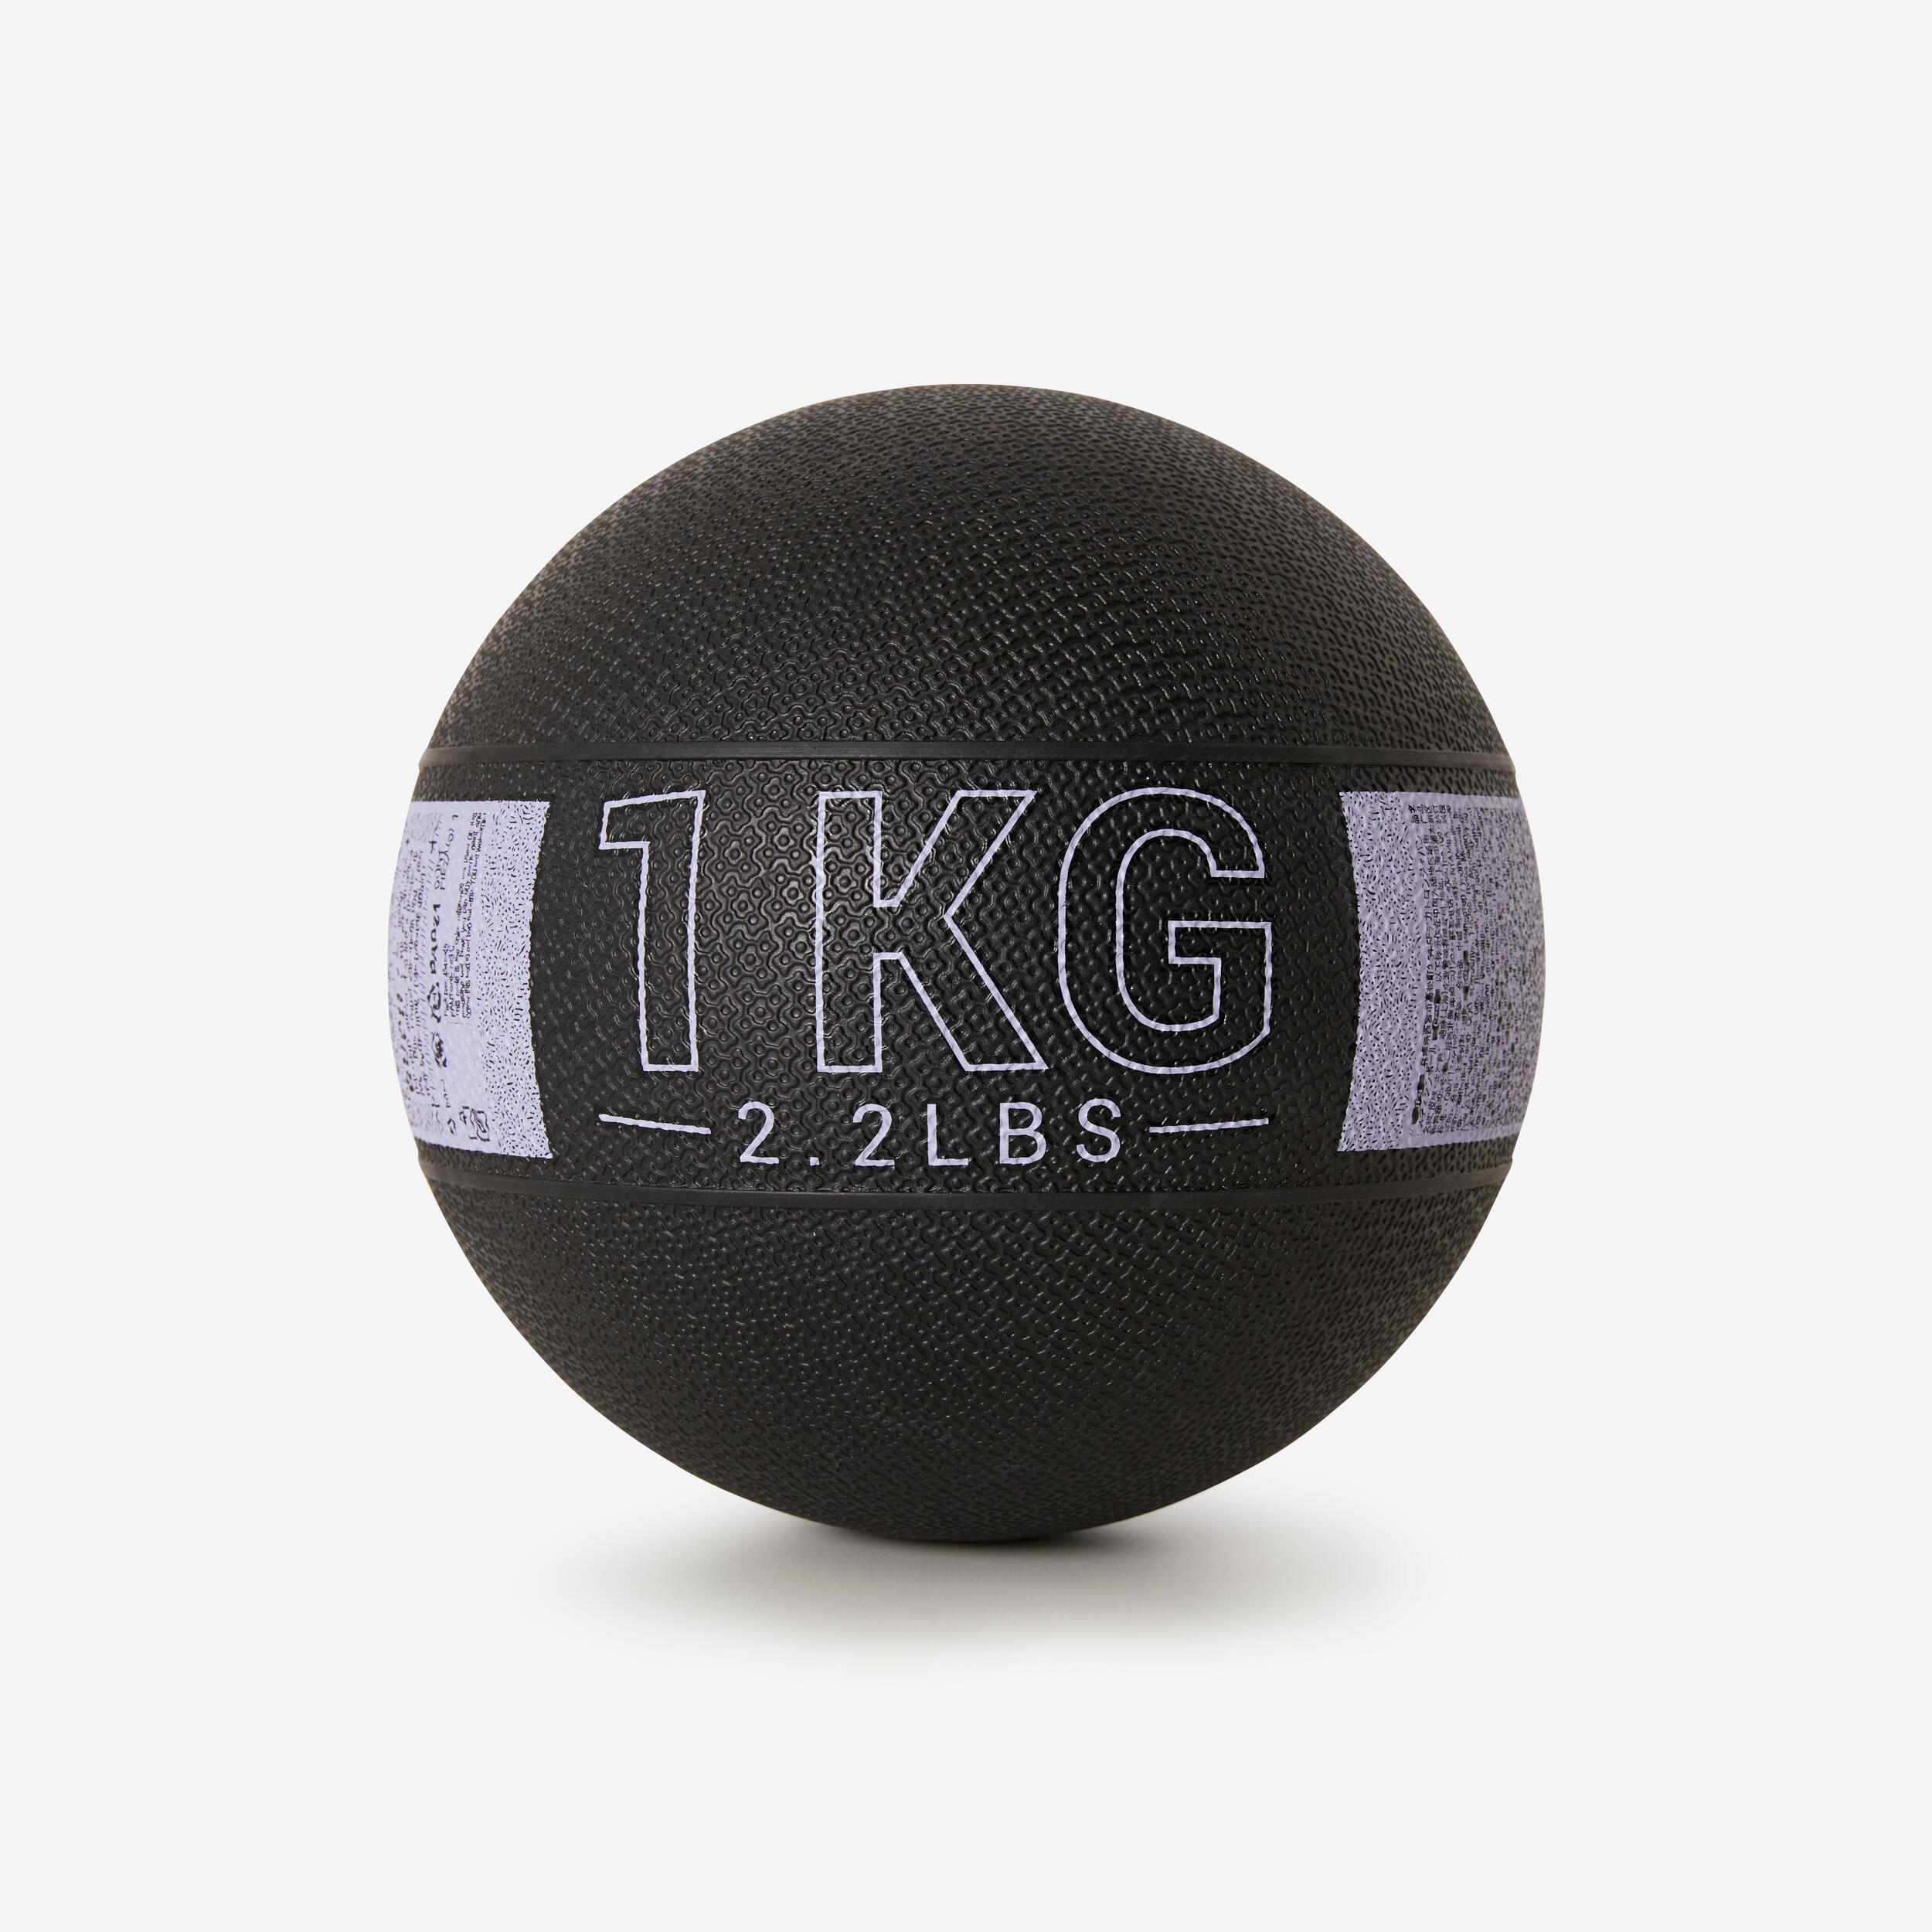 1 kg Rubber Medicine Ball - Black/Grey 1/4